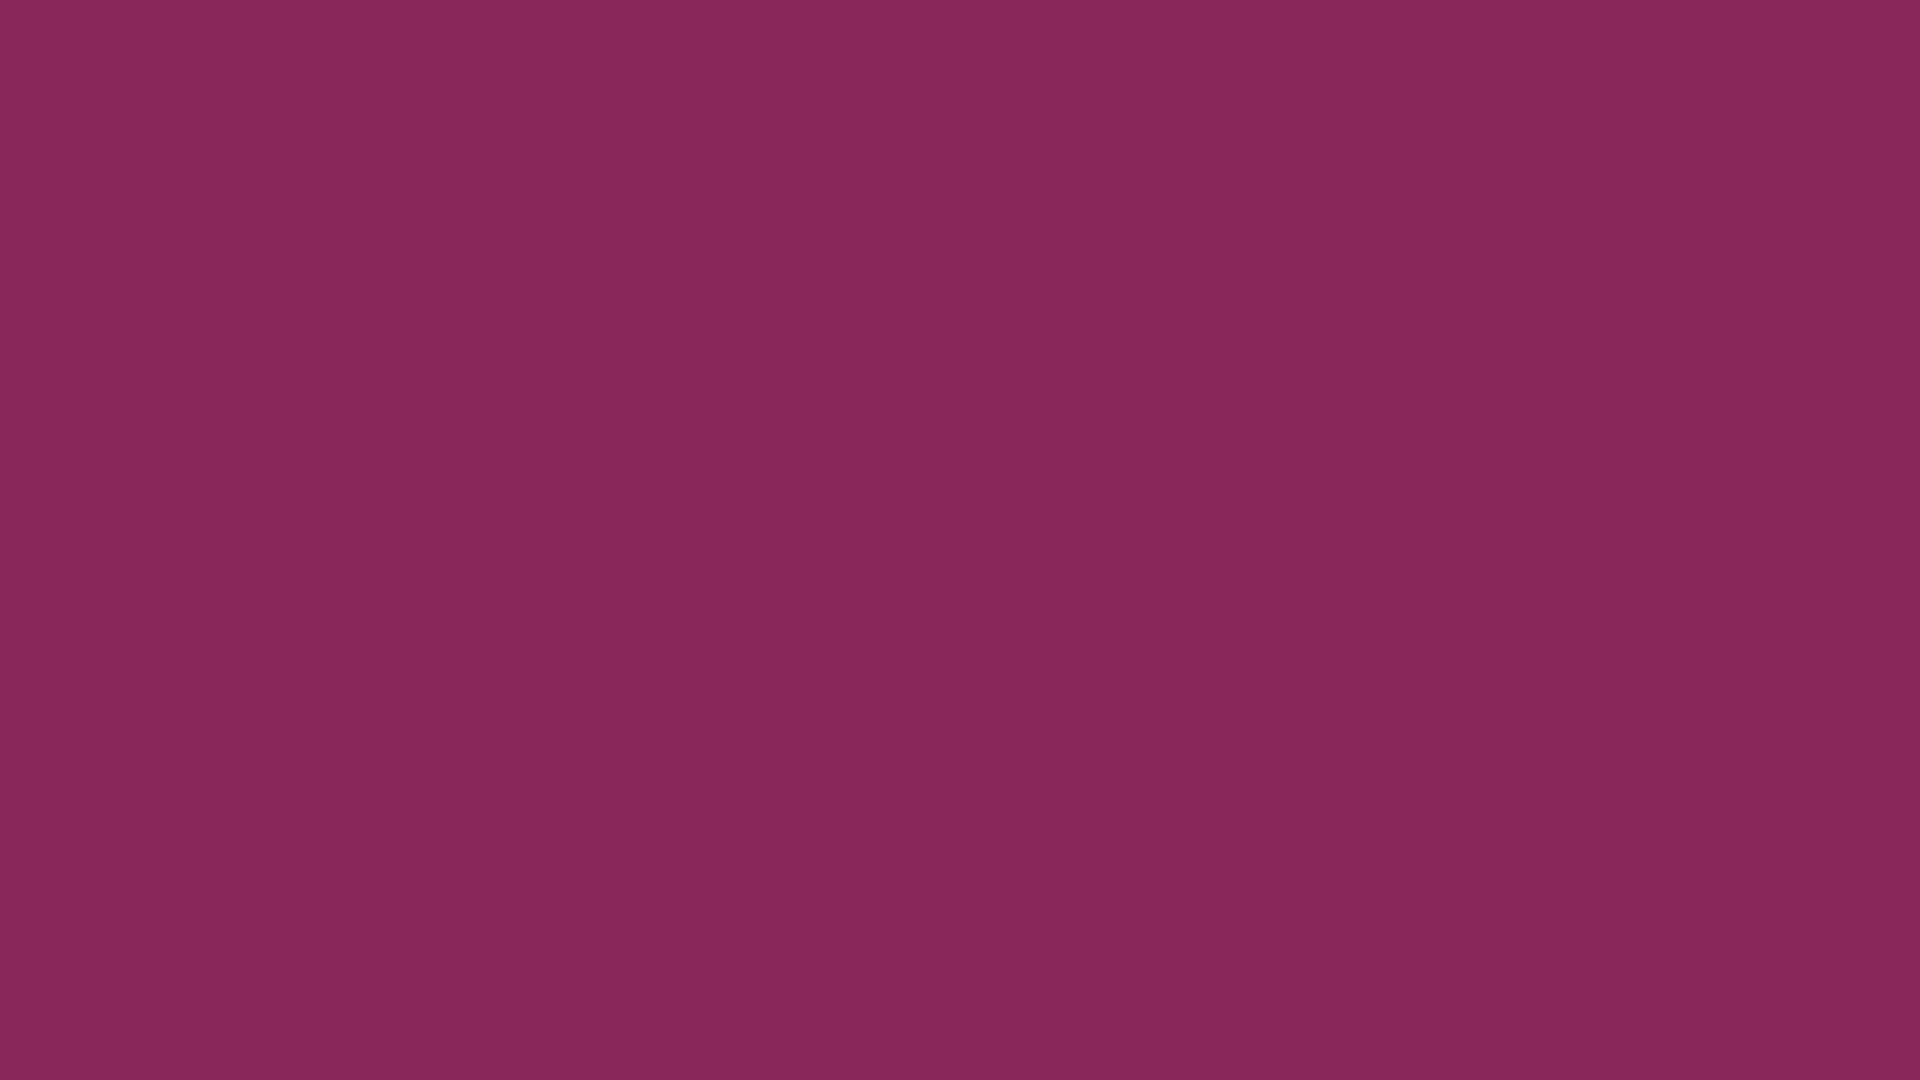 1920x1080 Dark Raspberry Solid Color Background